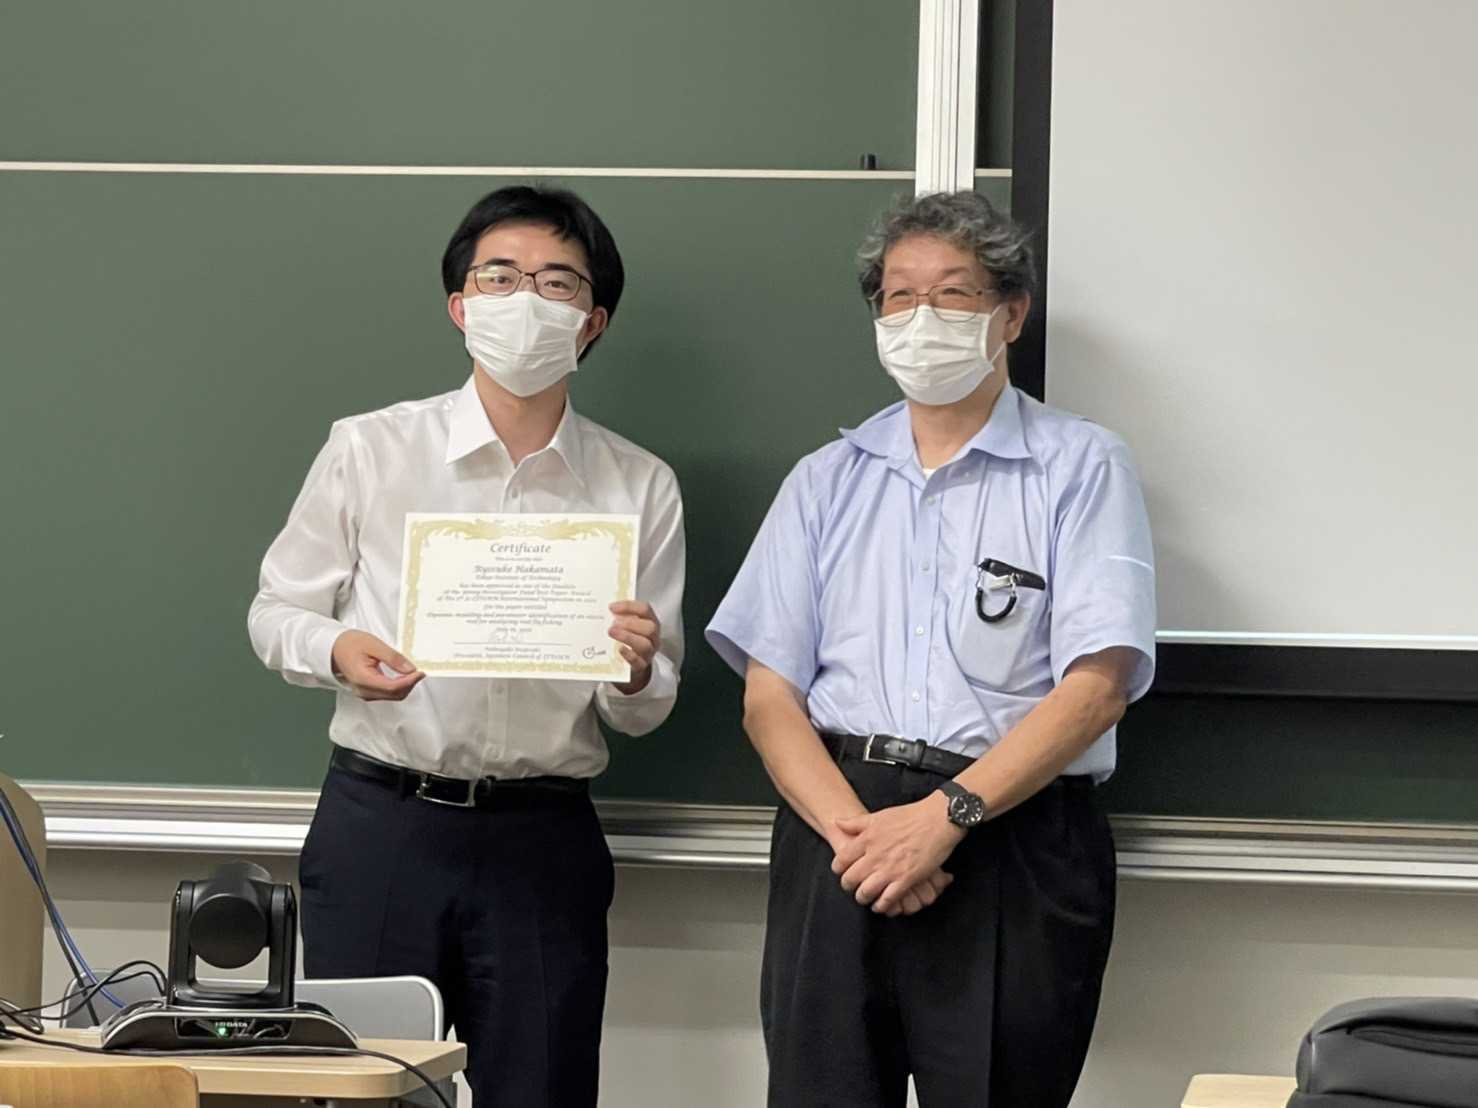 Ryosuke Hakamata won the Jc-IFToMM Young Investigator Found Finalist